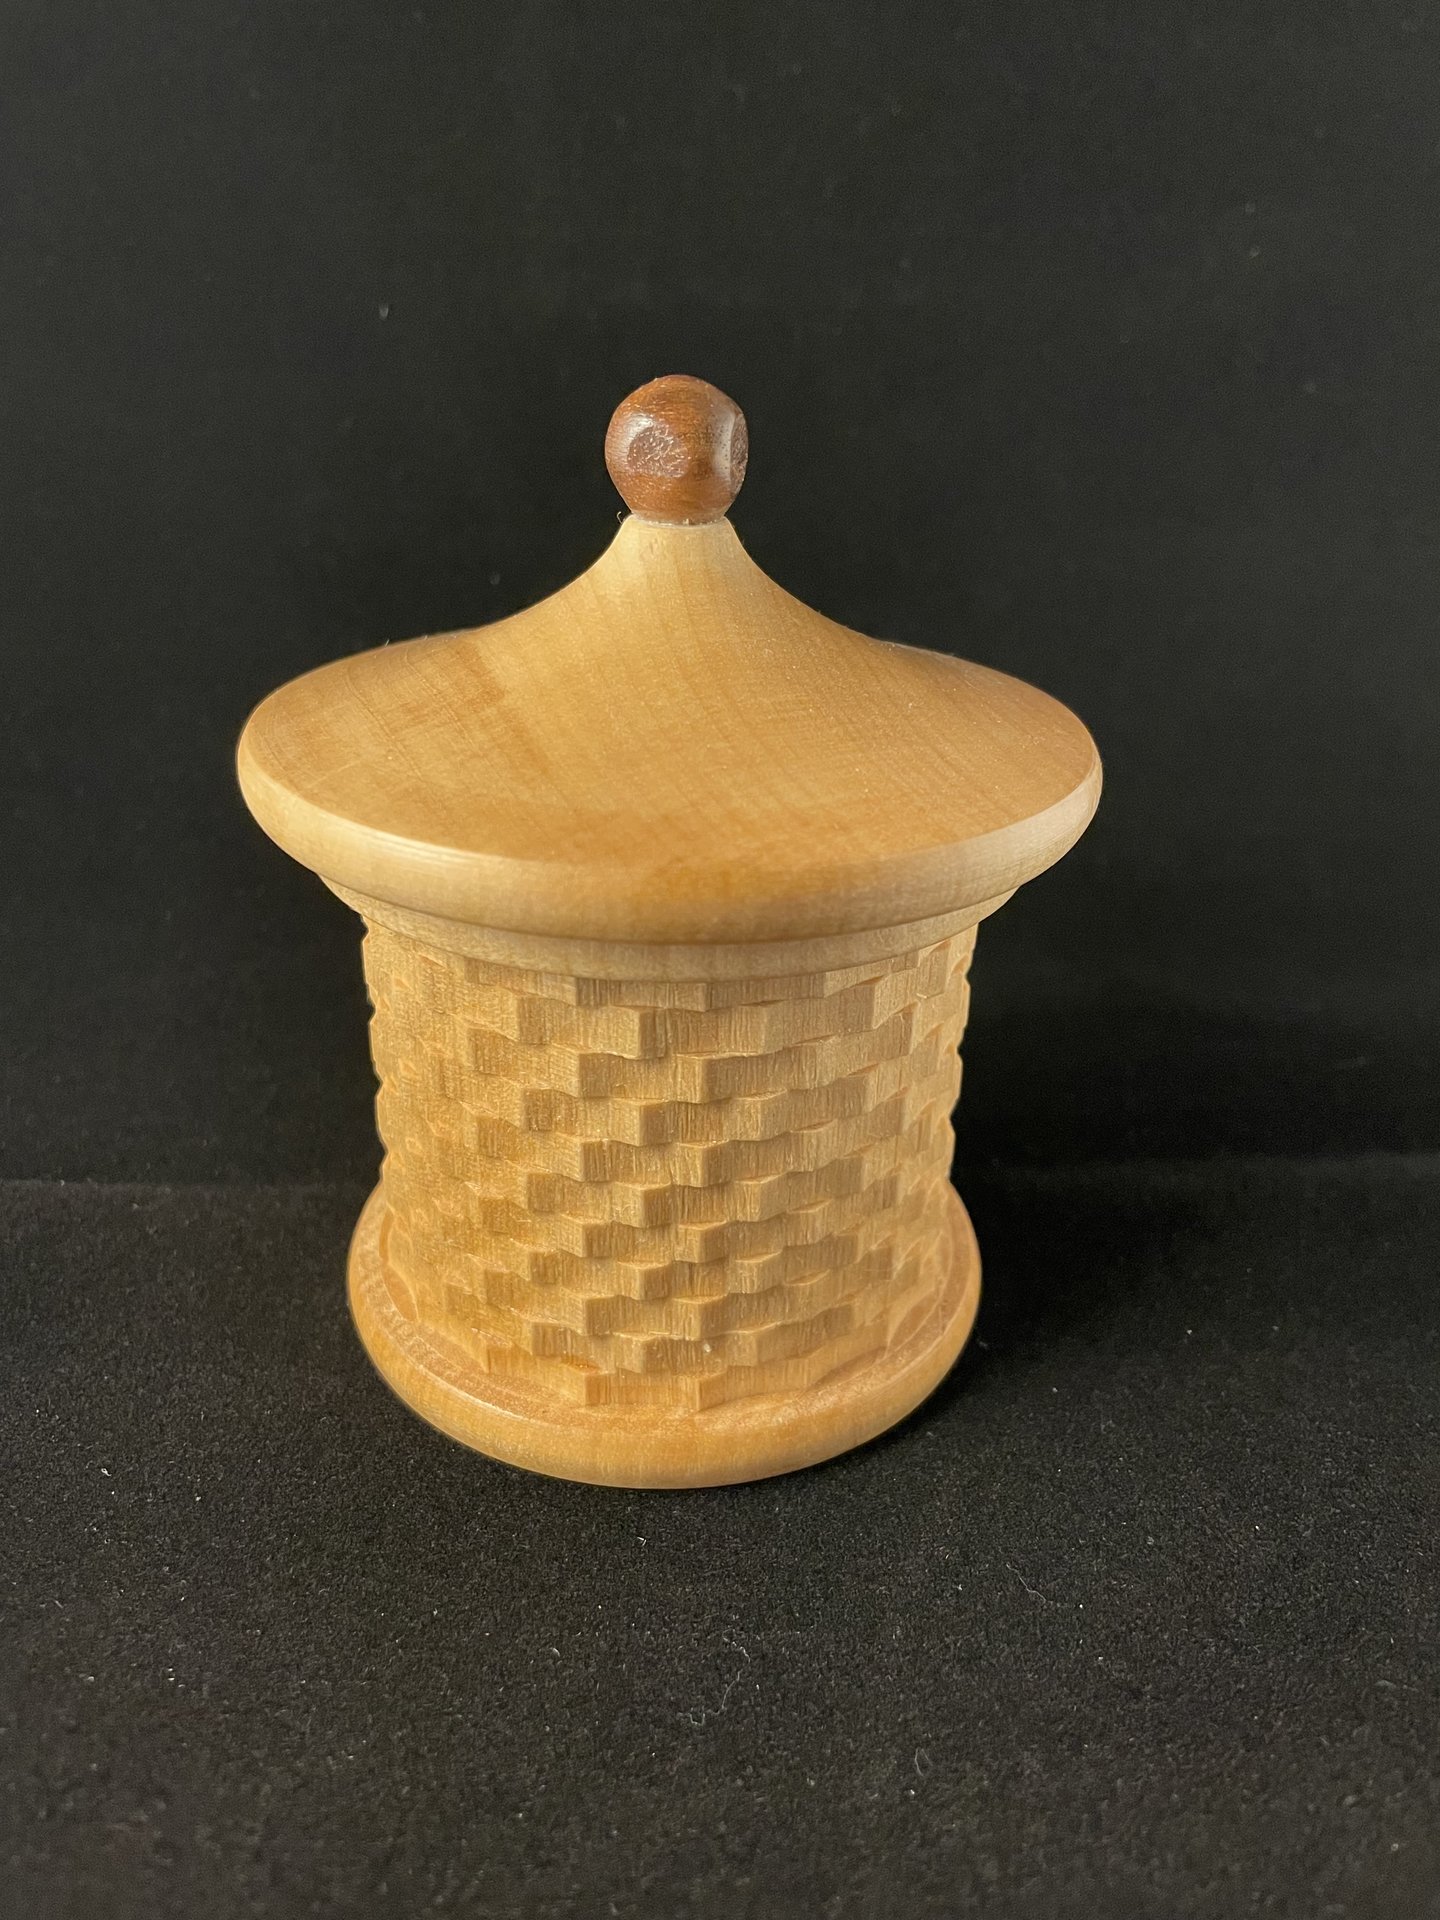 Birch Box with basketweave pattern